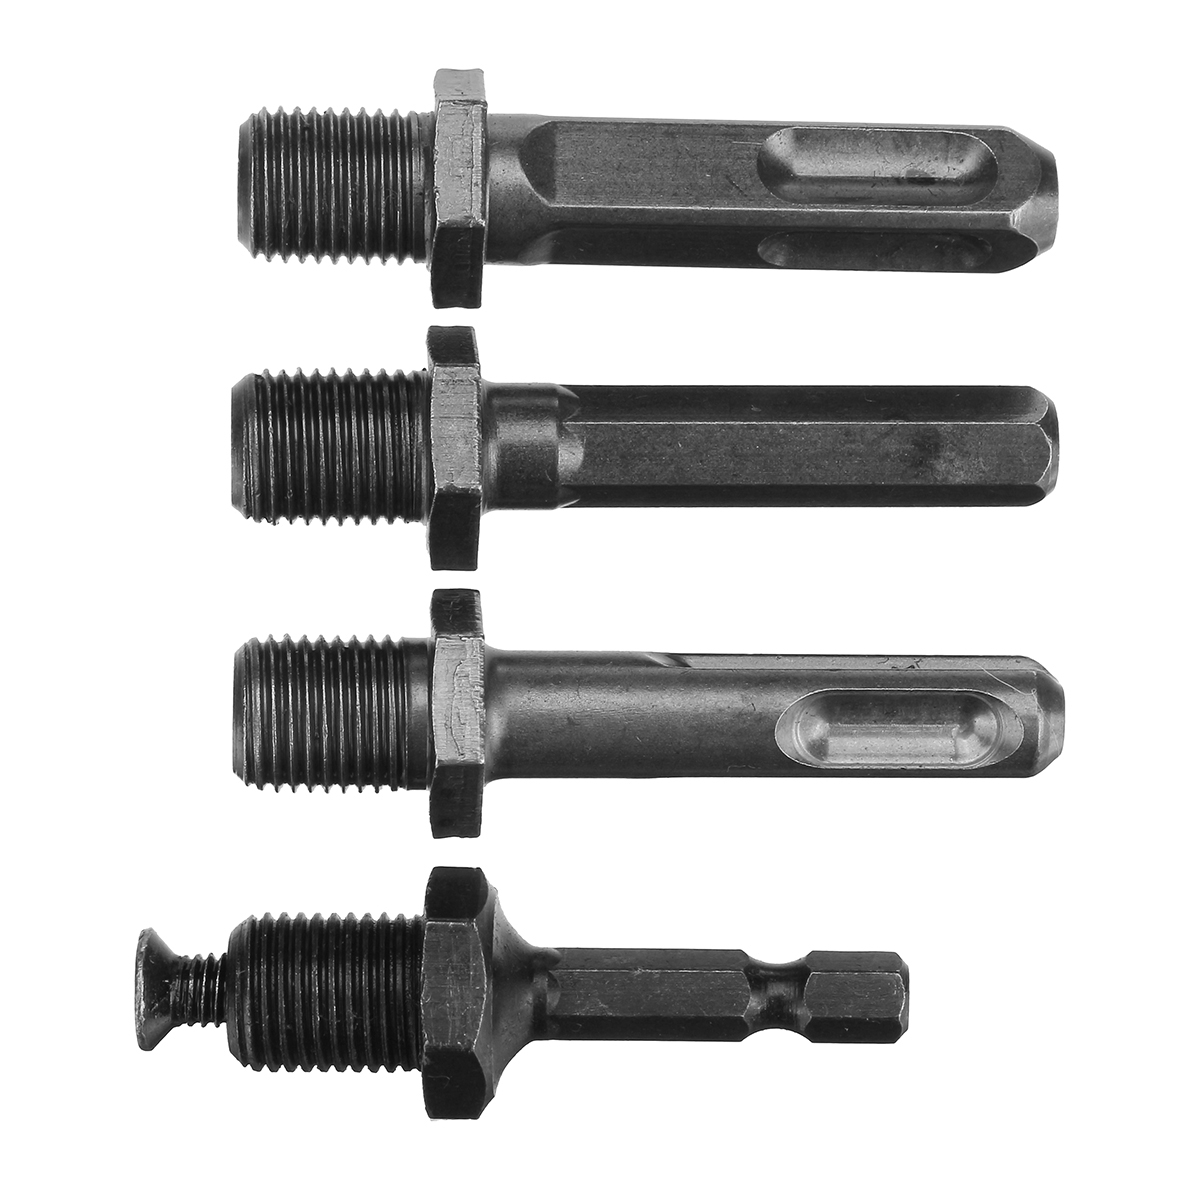 Firewood-Splitter-Drill-Bit-Round-Hexagonal-Shank-Wood-Splitting-Cone-Reamer-1937987-13